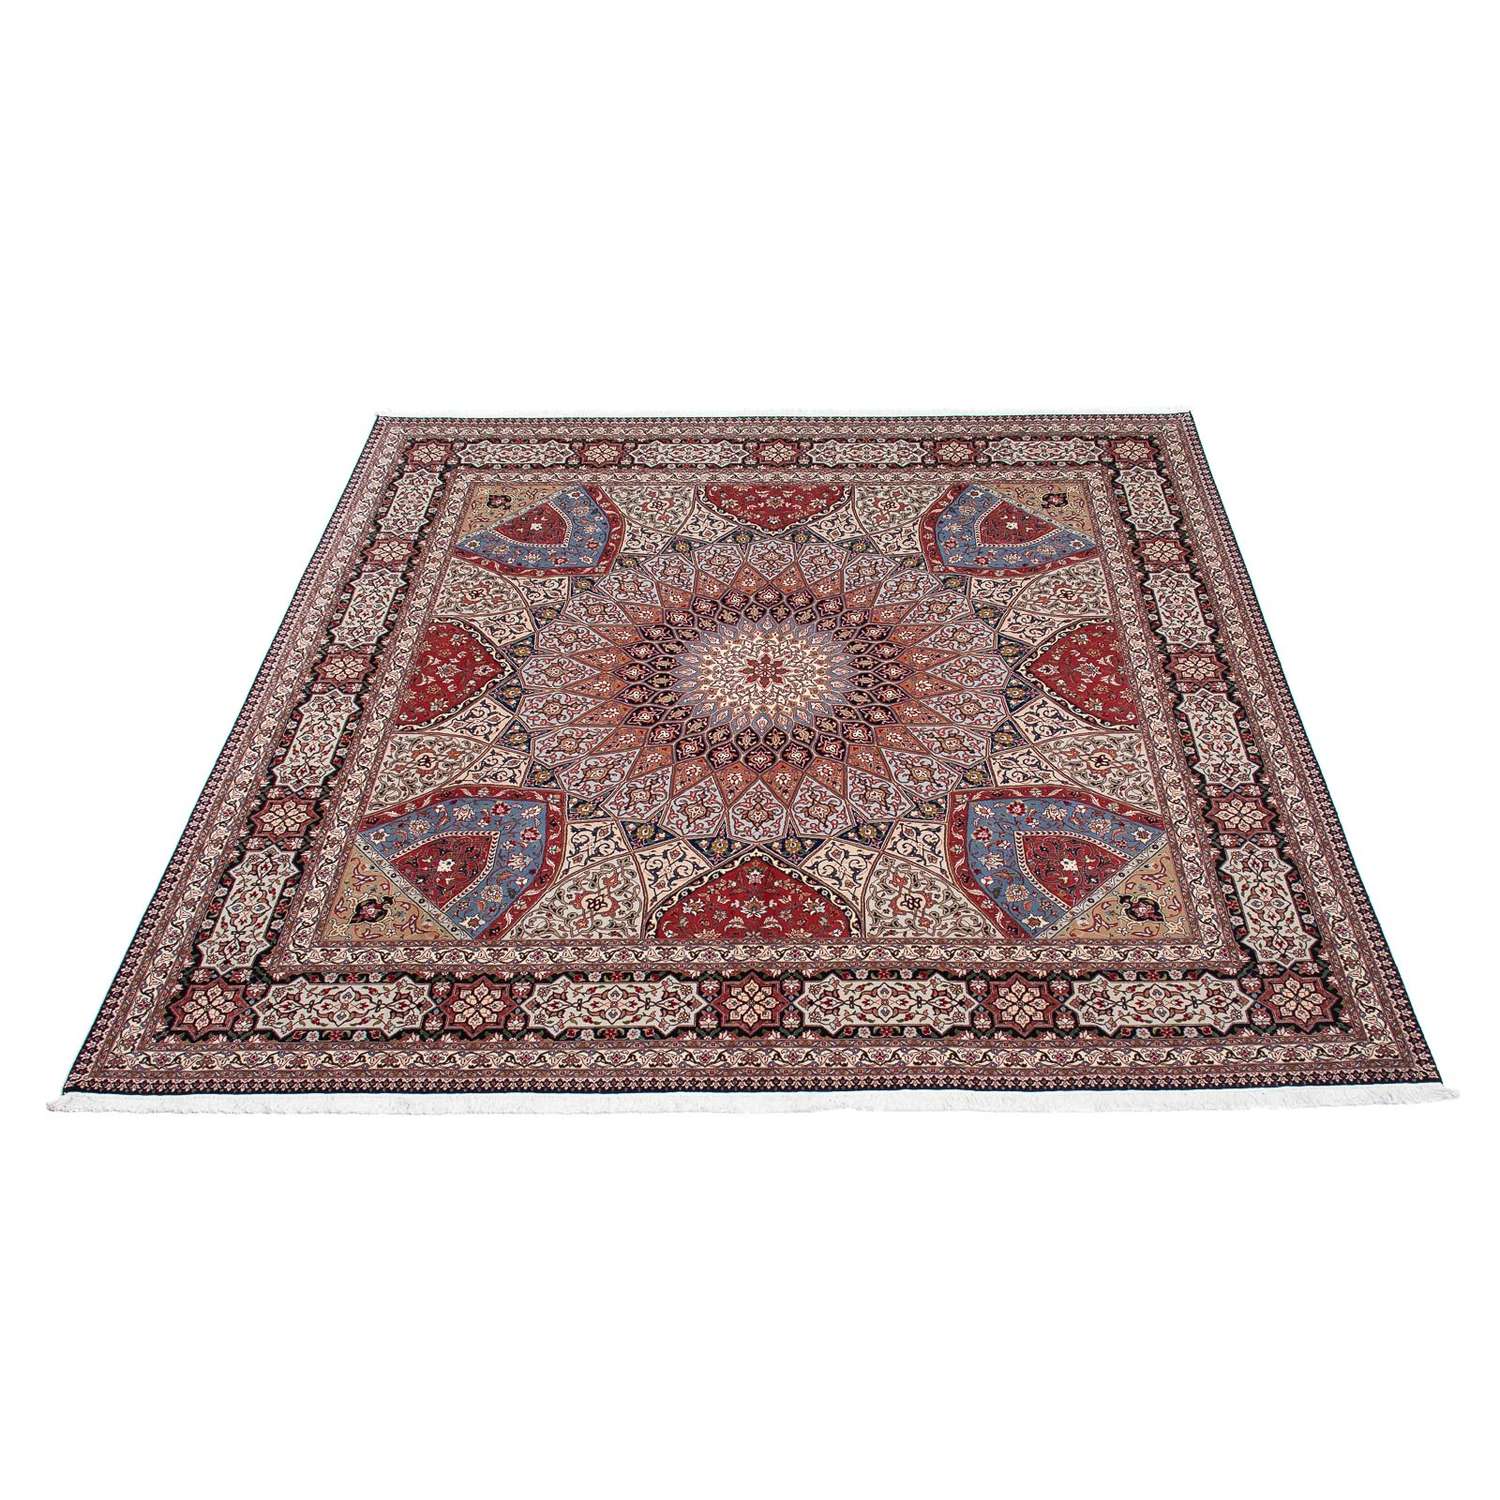 Perzisch tapijt - Tabriz - Royal vierkant  - 300 x 298 cm - veelkleurig